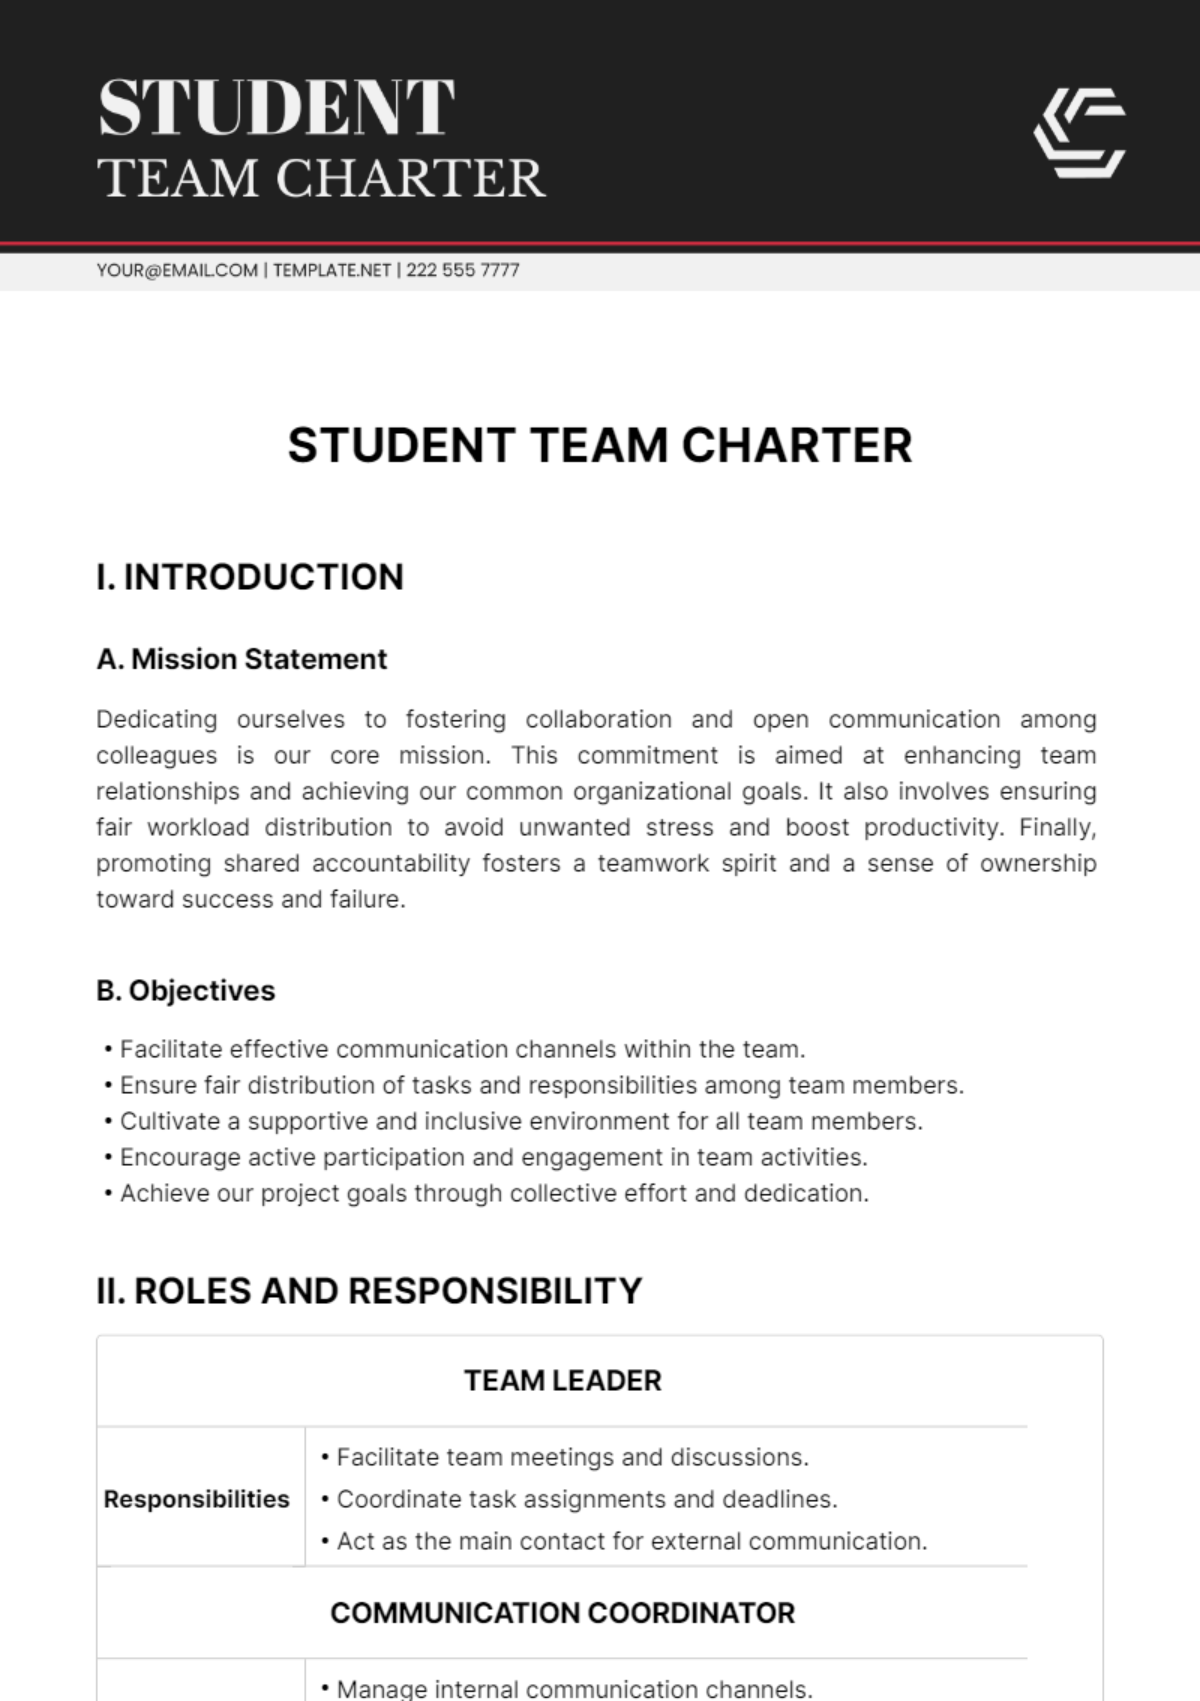 Student Team Charter Template